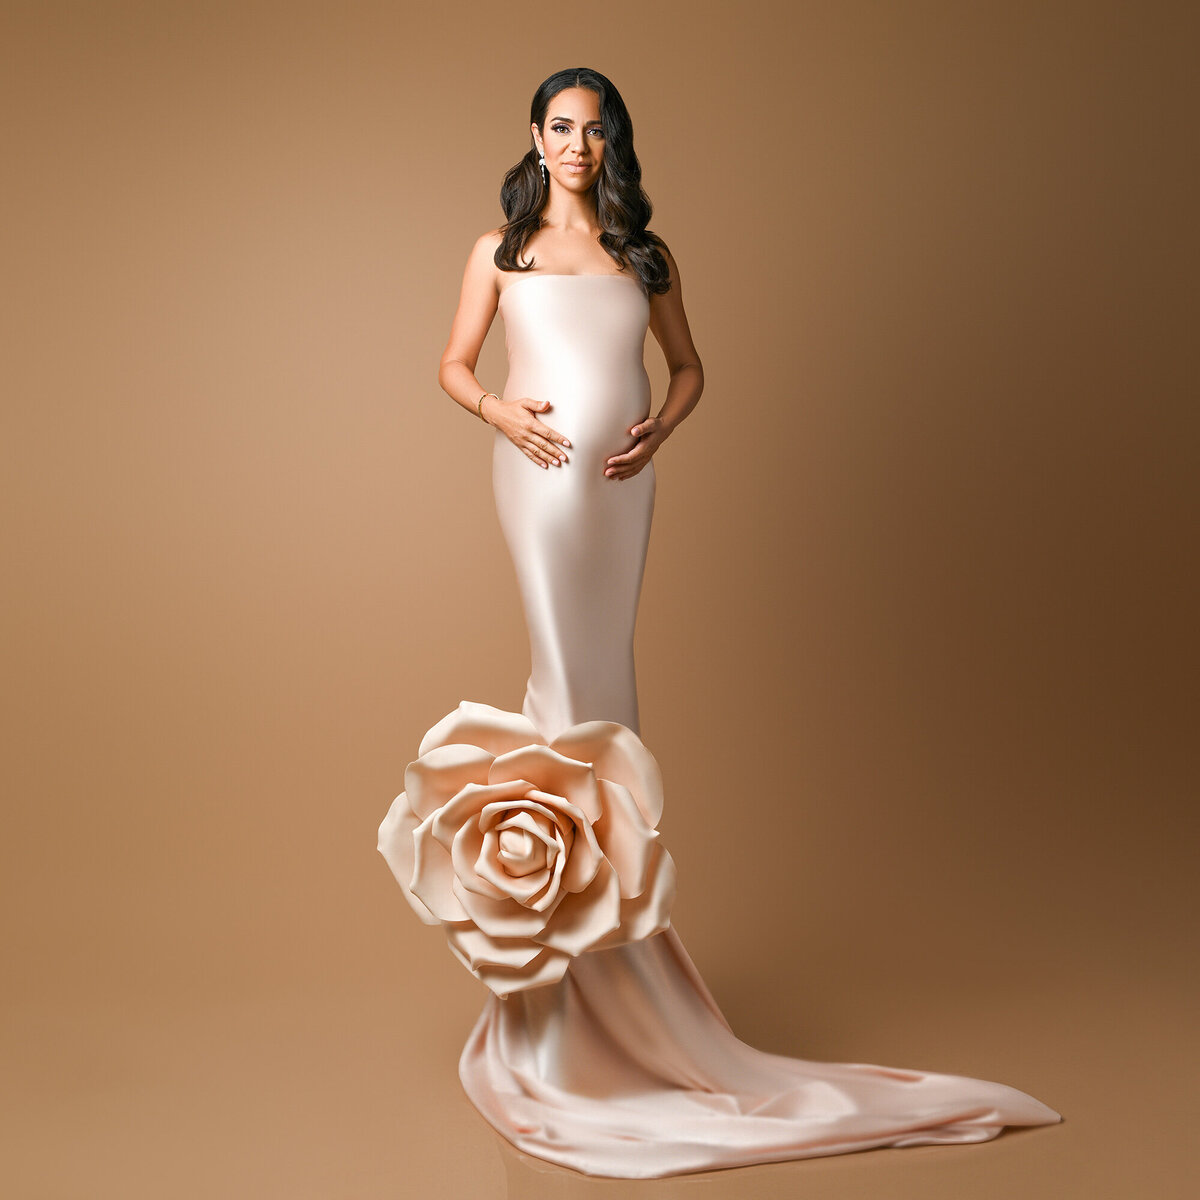 15 - lisset galeyev maternity photographer miami